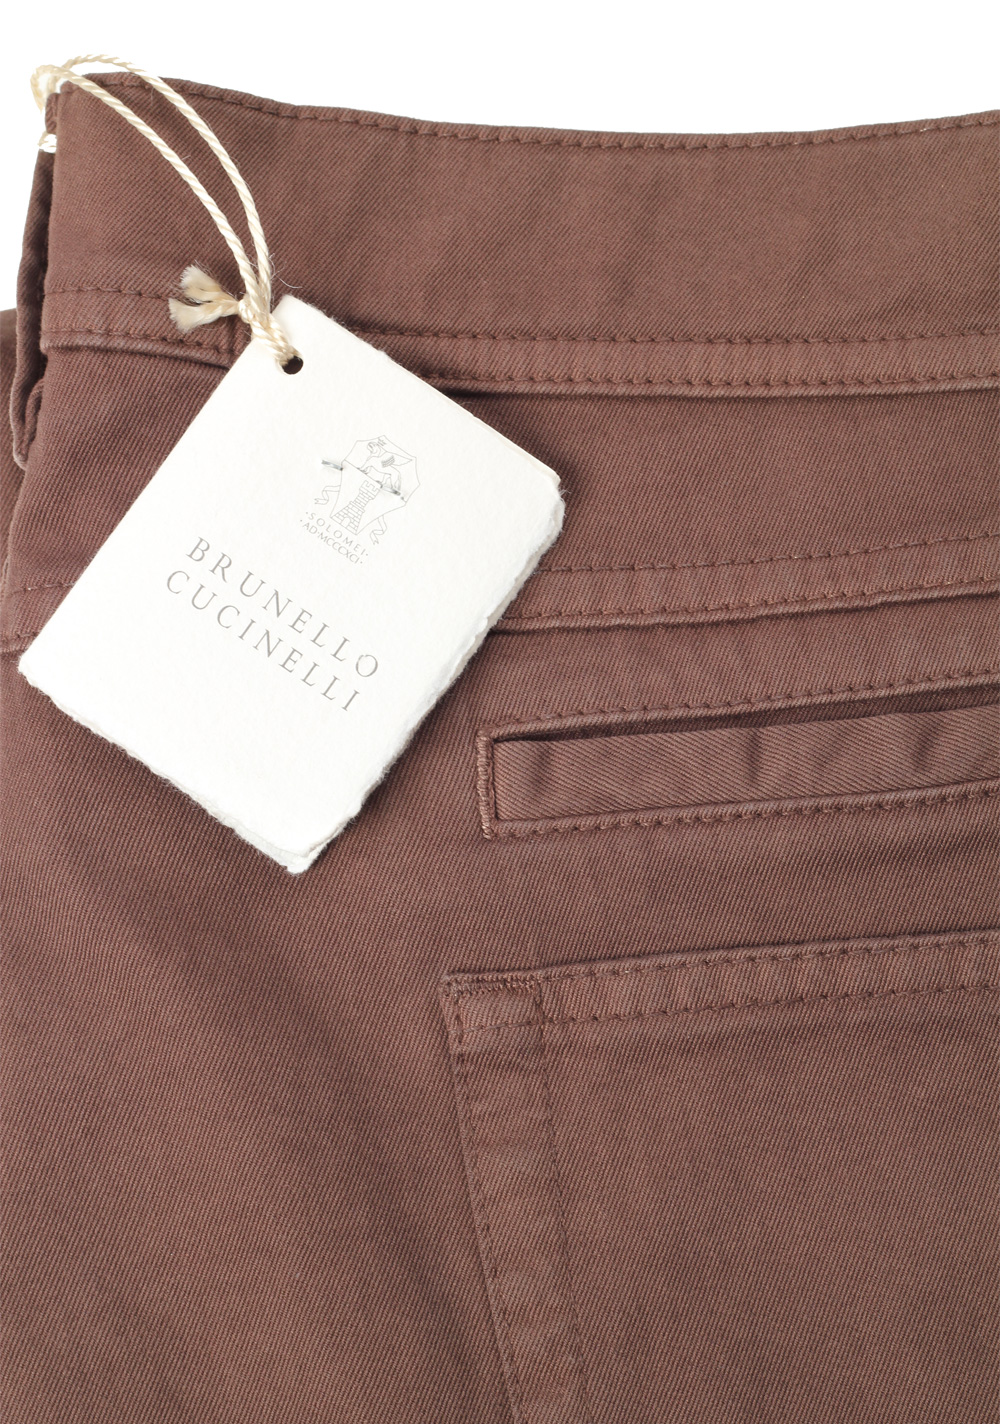 Brunello Cucinelli Brown Trousers Size 54 / 38 U.S. | Costume Limité